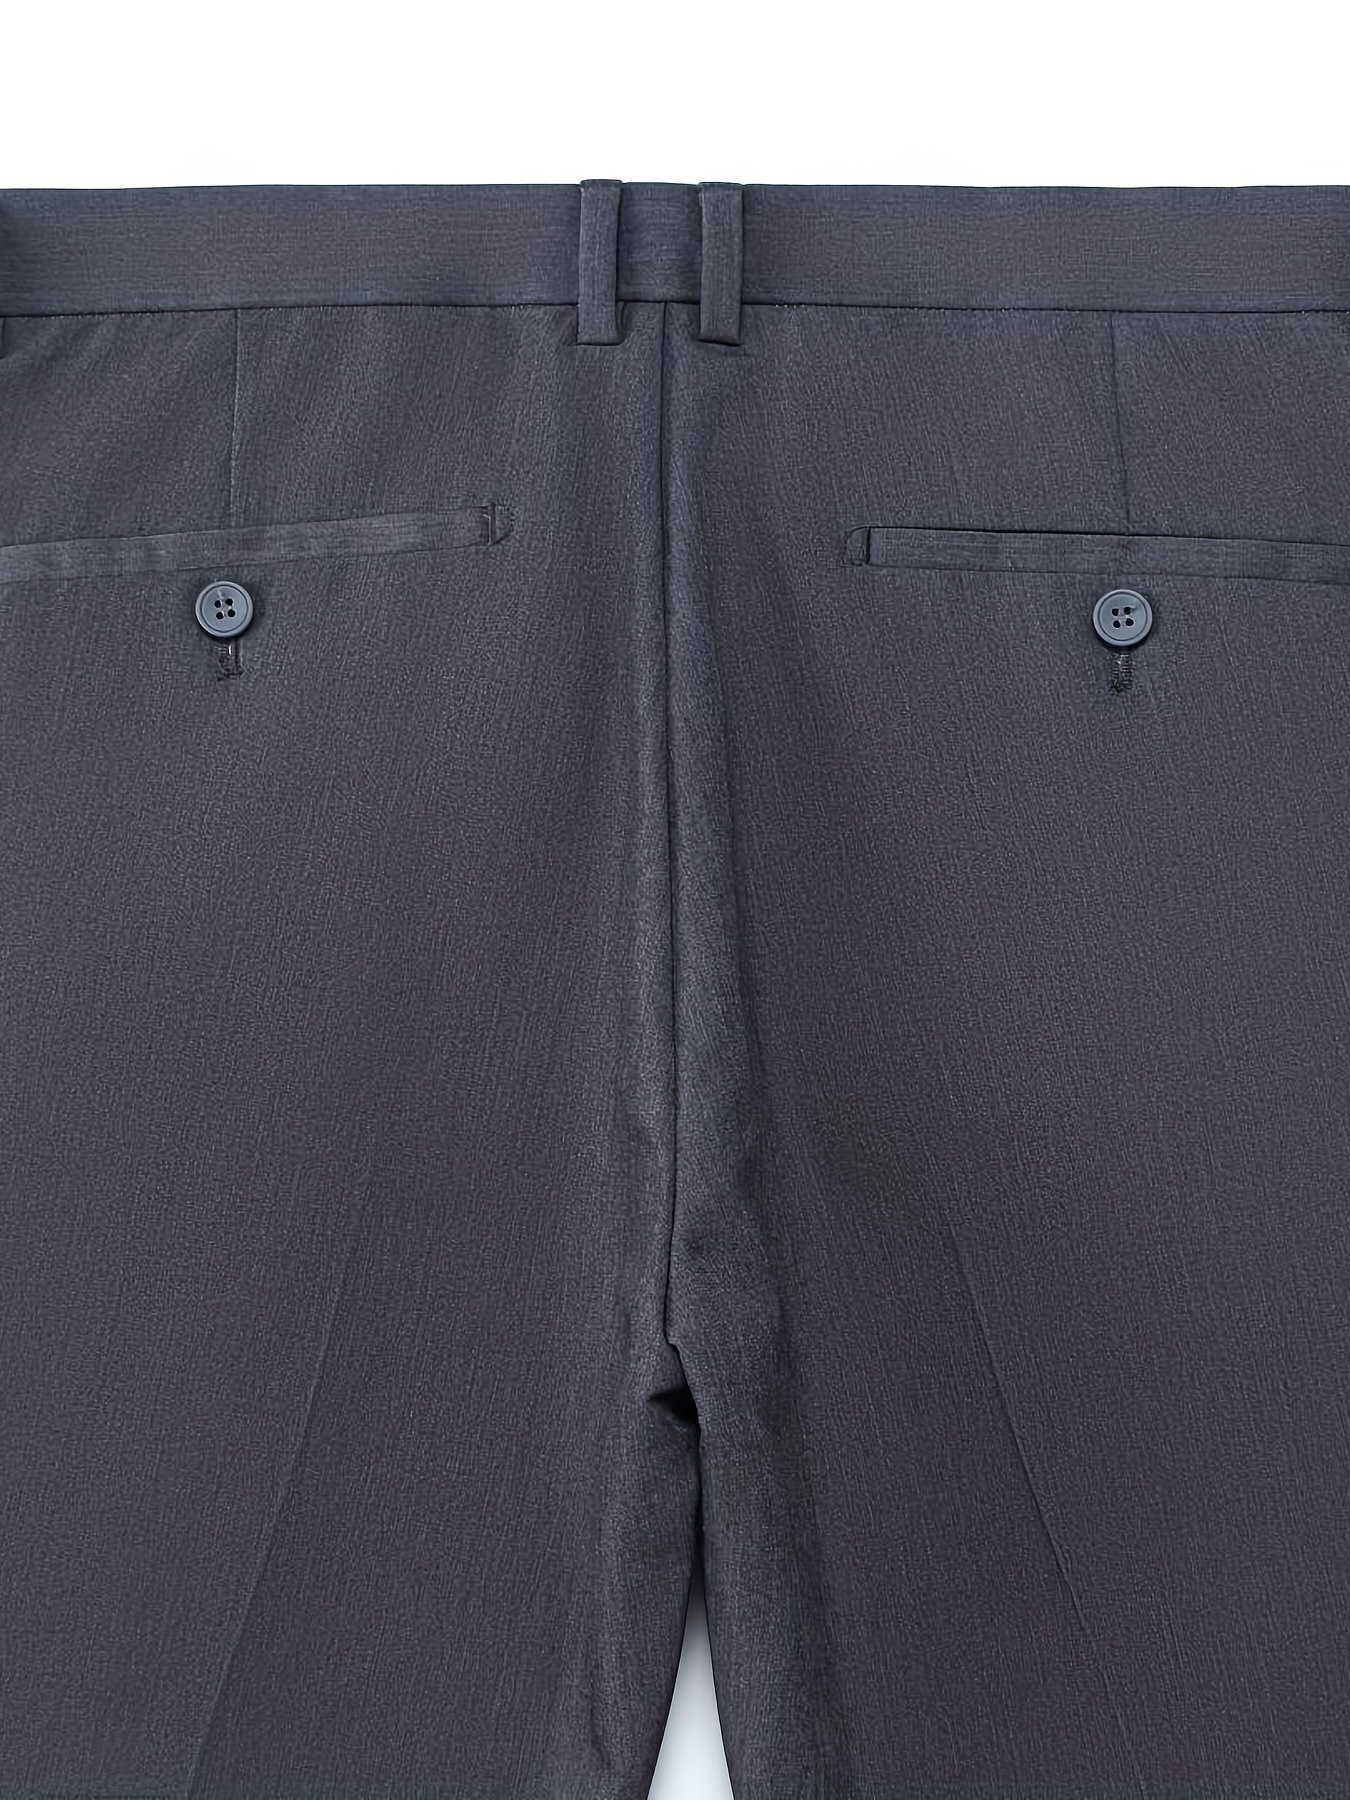 Fashion (apricot)New Men Non-iron Fabric Dress Pants Slim Straight